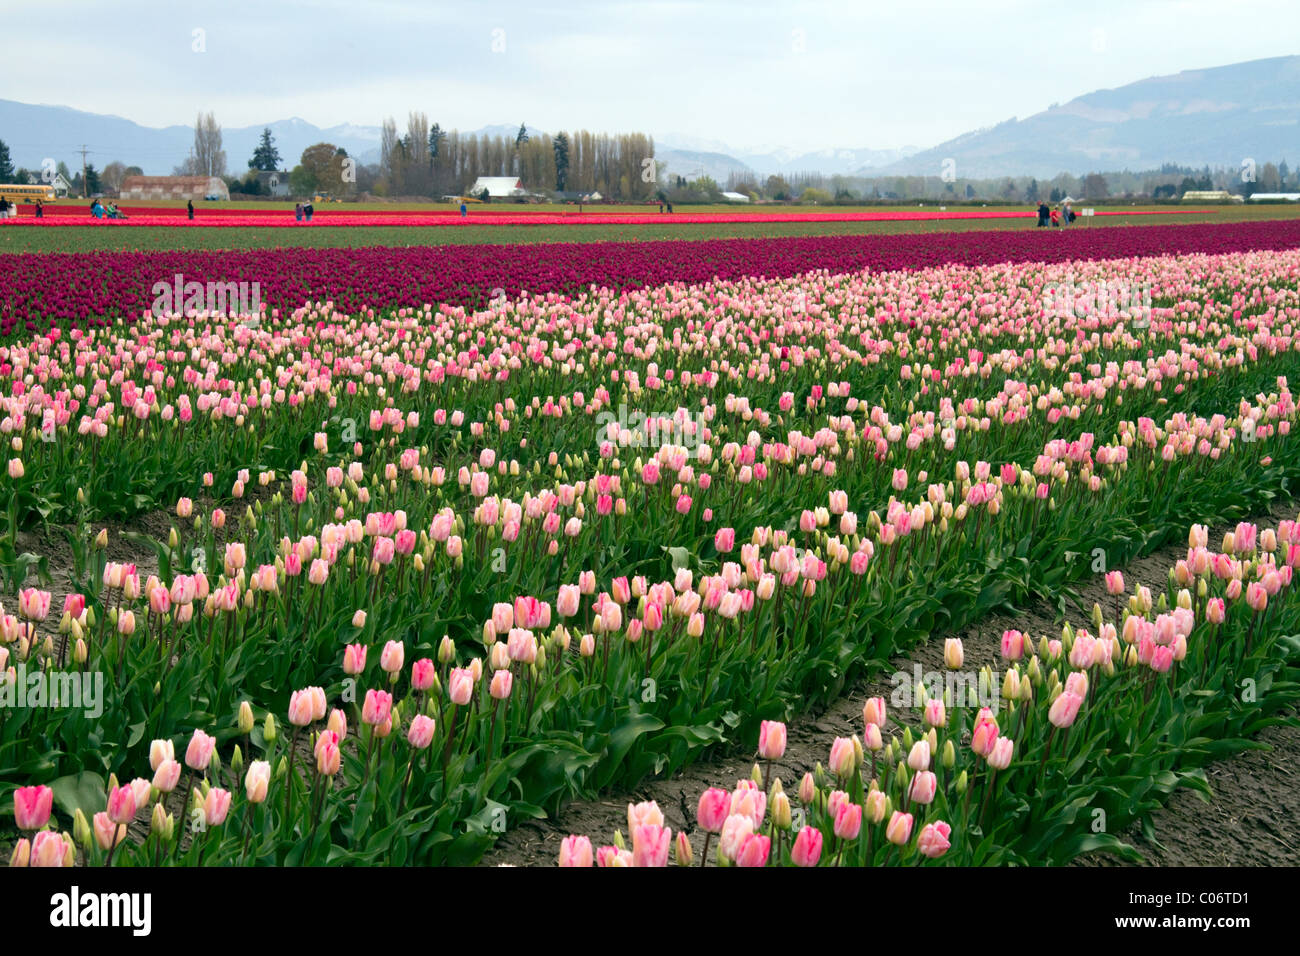 Show garden of spring-flowering tulip bulbs in Skagit Valley, Washington, USA. Stock Photo